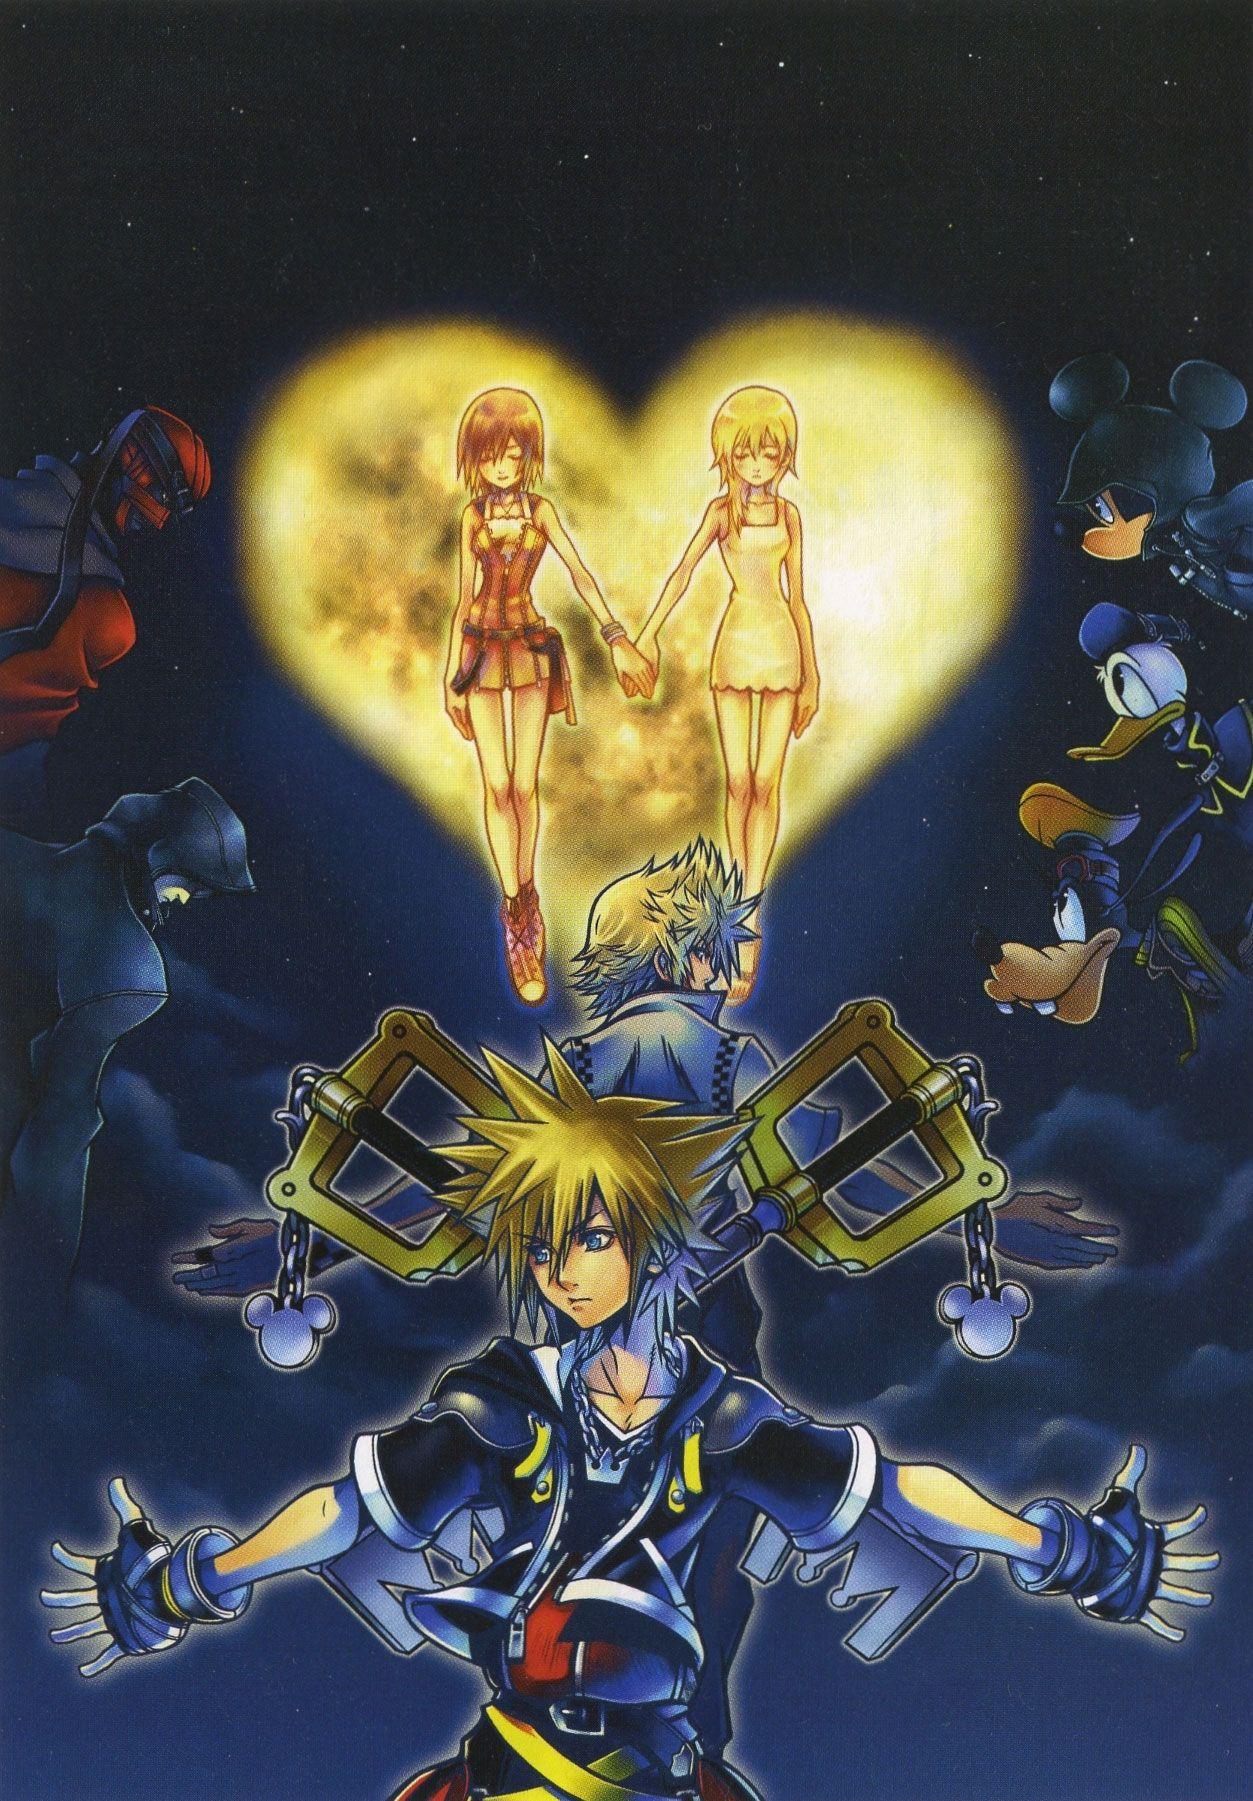 Kingdom Hearts 2 wallpaper. Kingdom Hearts 2 background